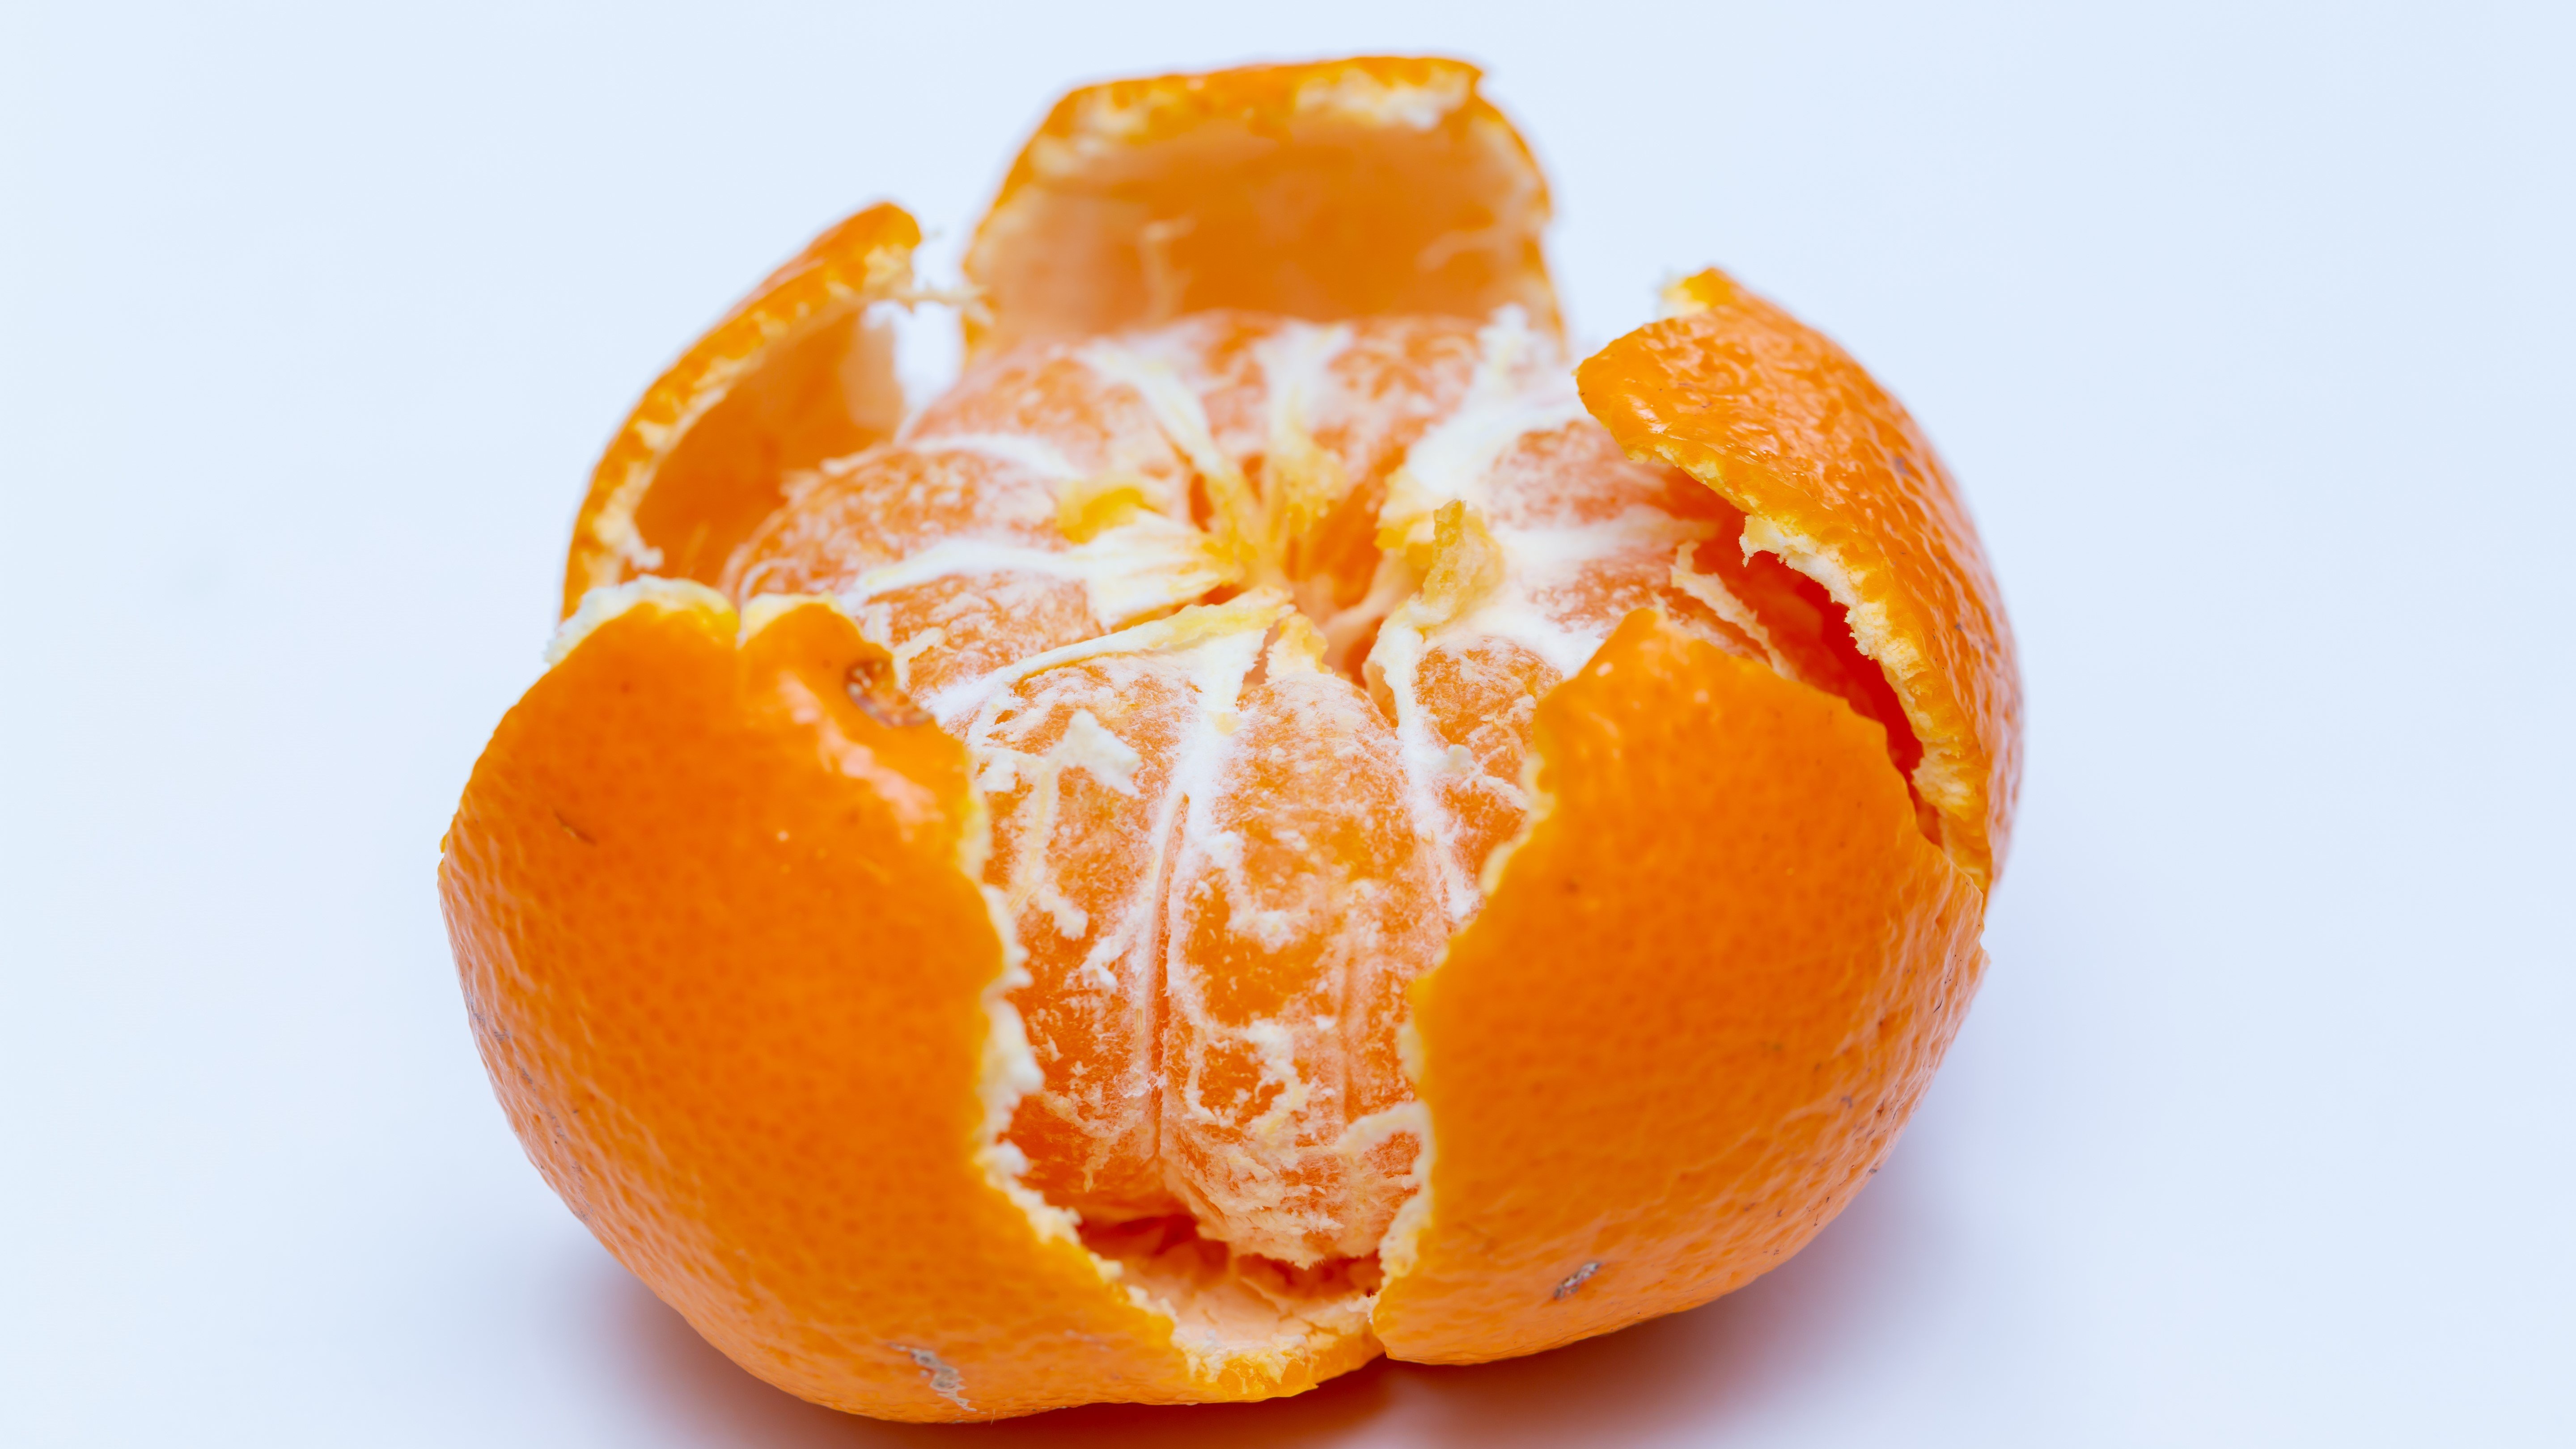 Satsuma orange peel